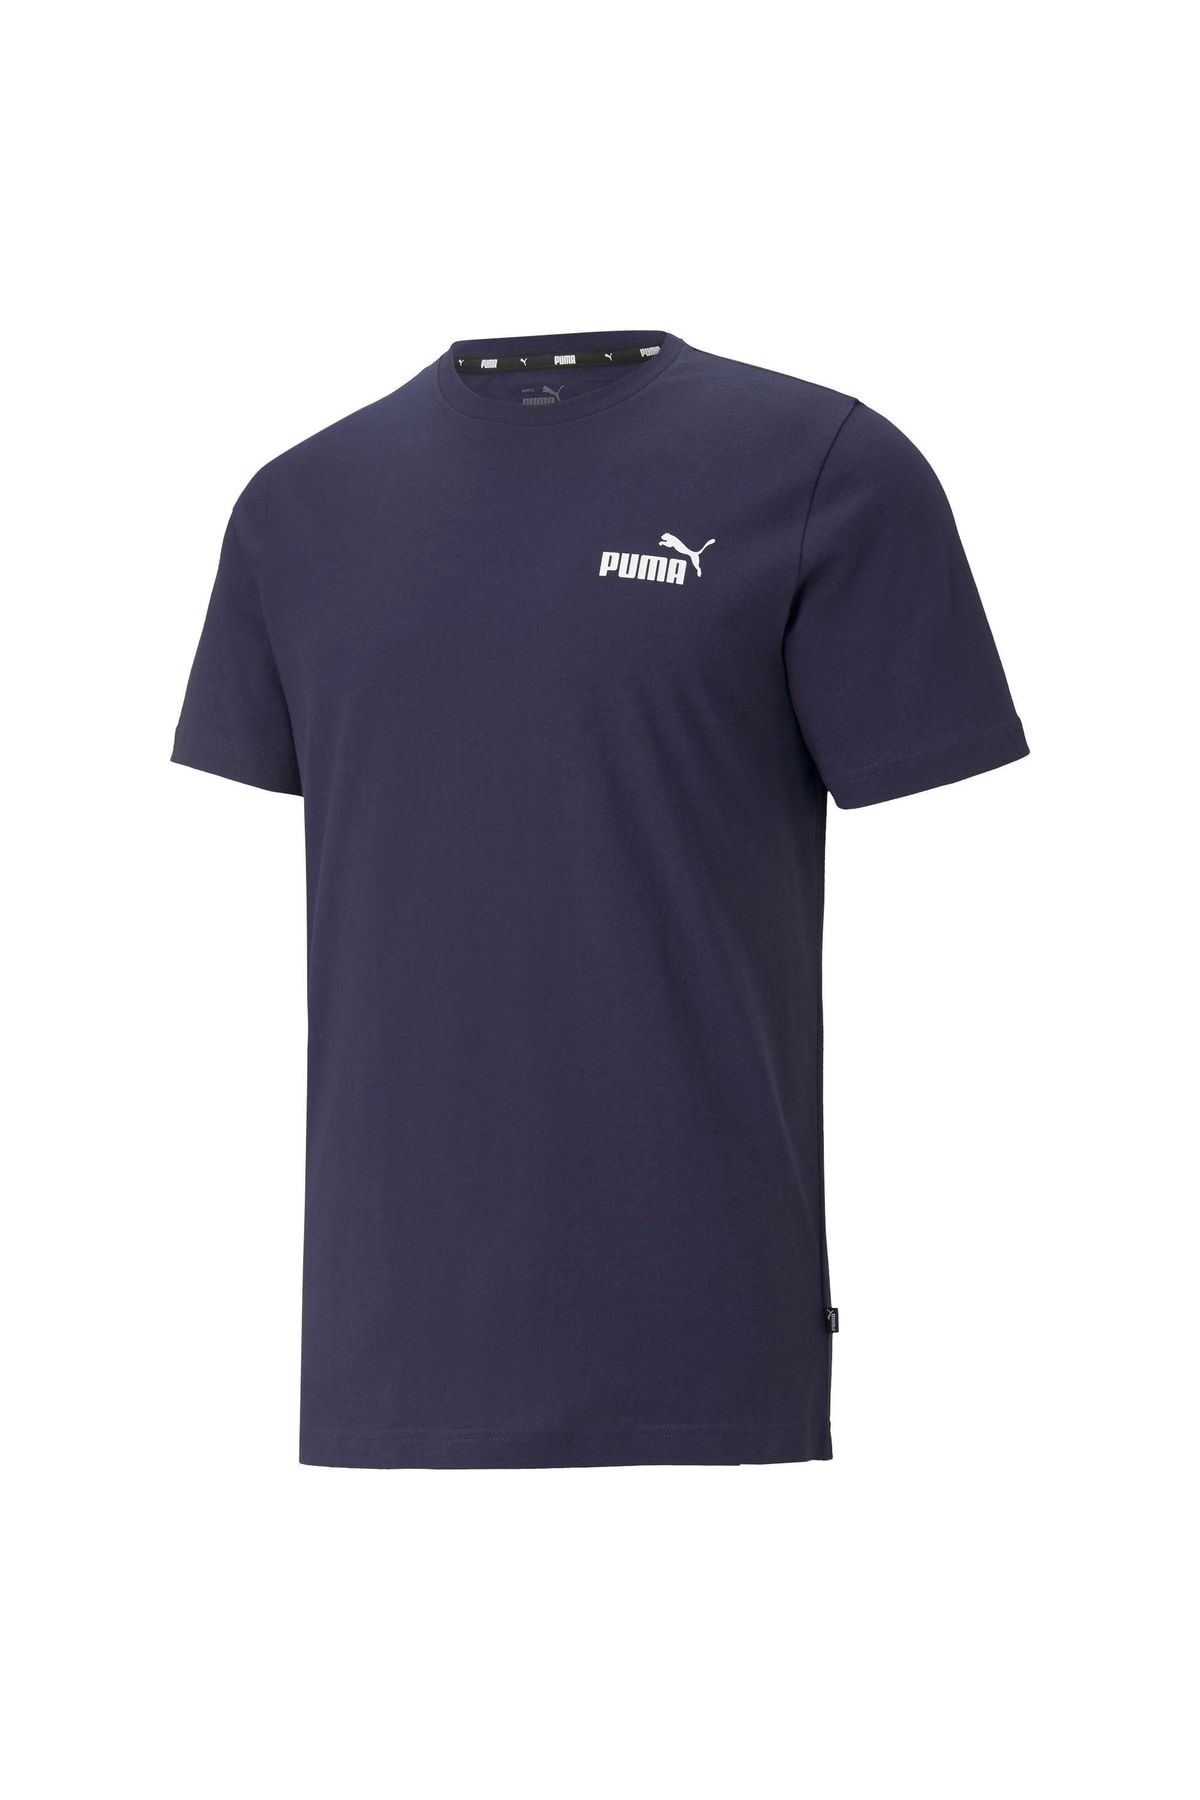 ESS Small Blue - Tee T-Shirt Logo Trendyol Puma - Men\'s Navy